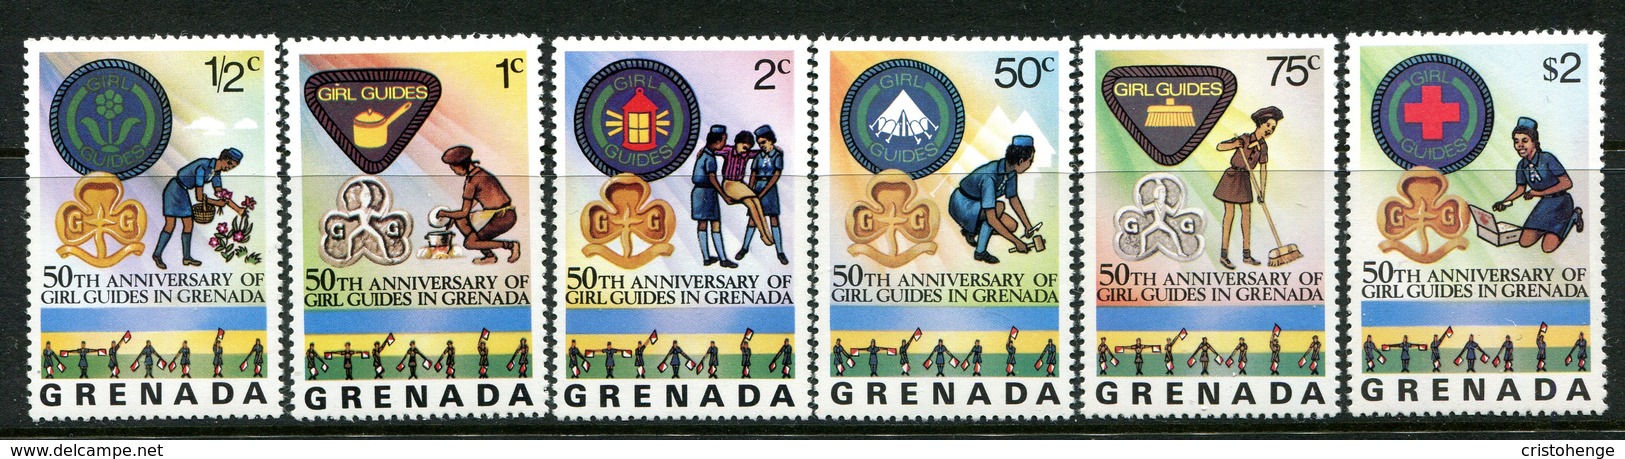 Grenada 1976 50th Anniversary Of Girl Guides In Grenada Set MNH (SG 793-798) - Grenada (1974-...)